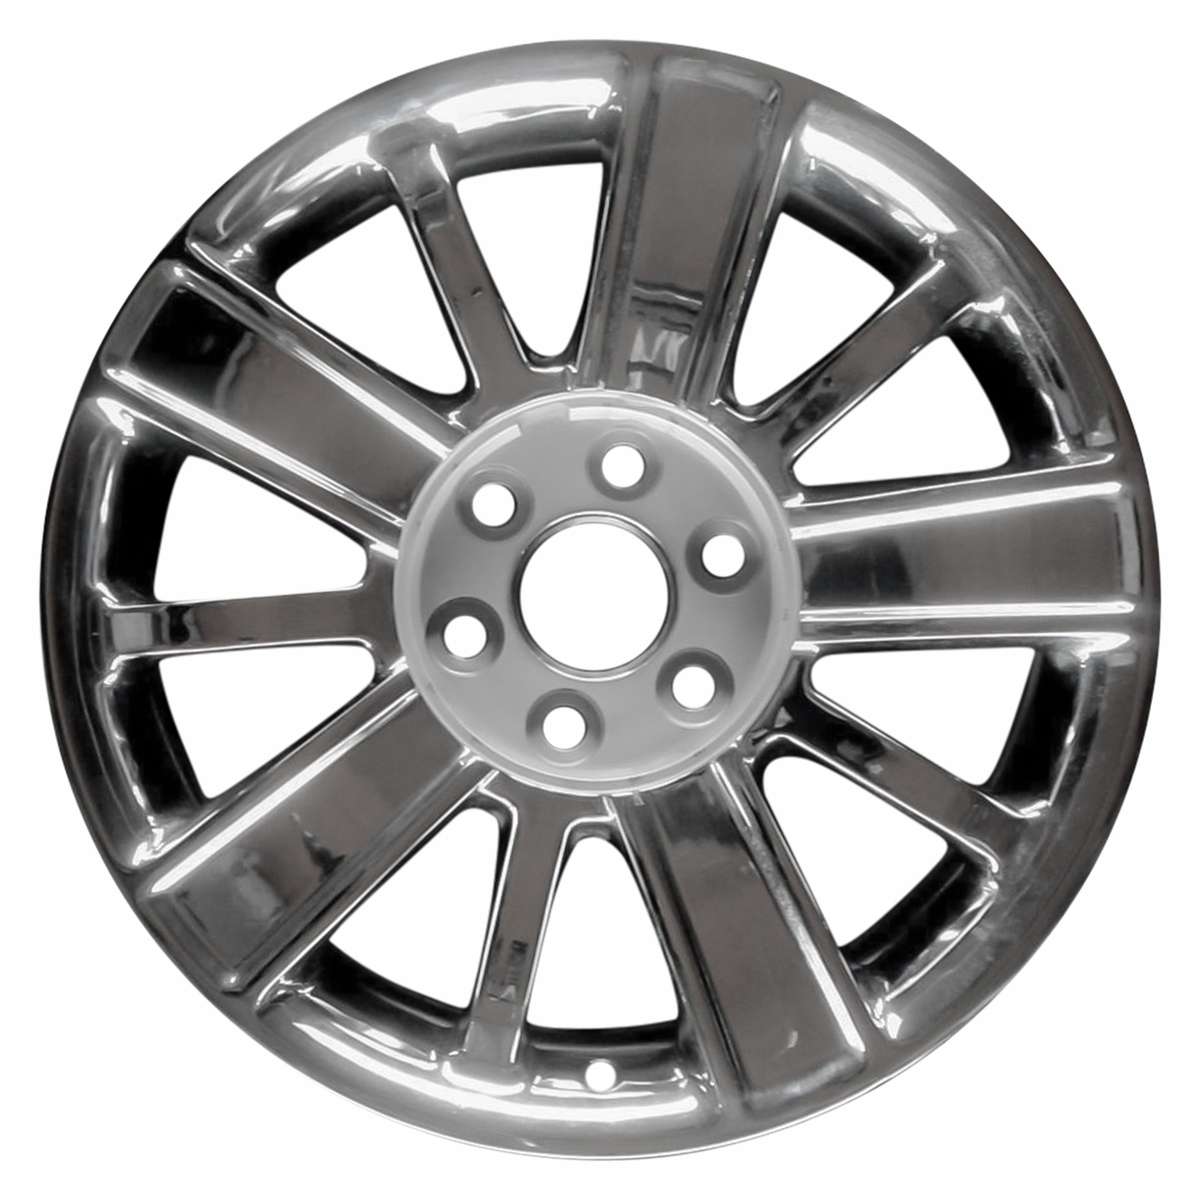 2014 Chevrolet Silverado 1500 20" OEM Wheel Rim W5653CHR